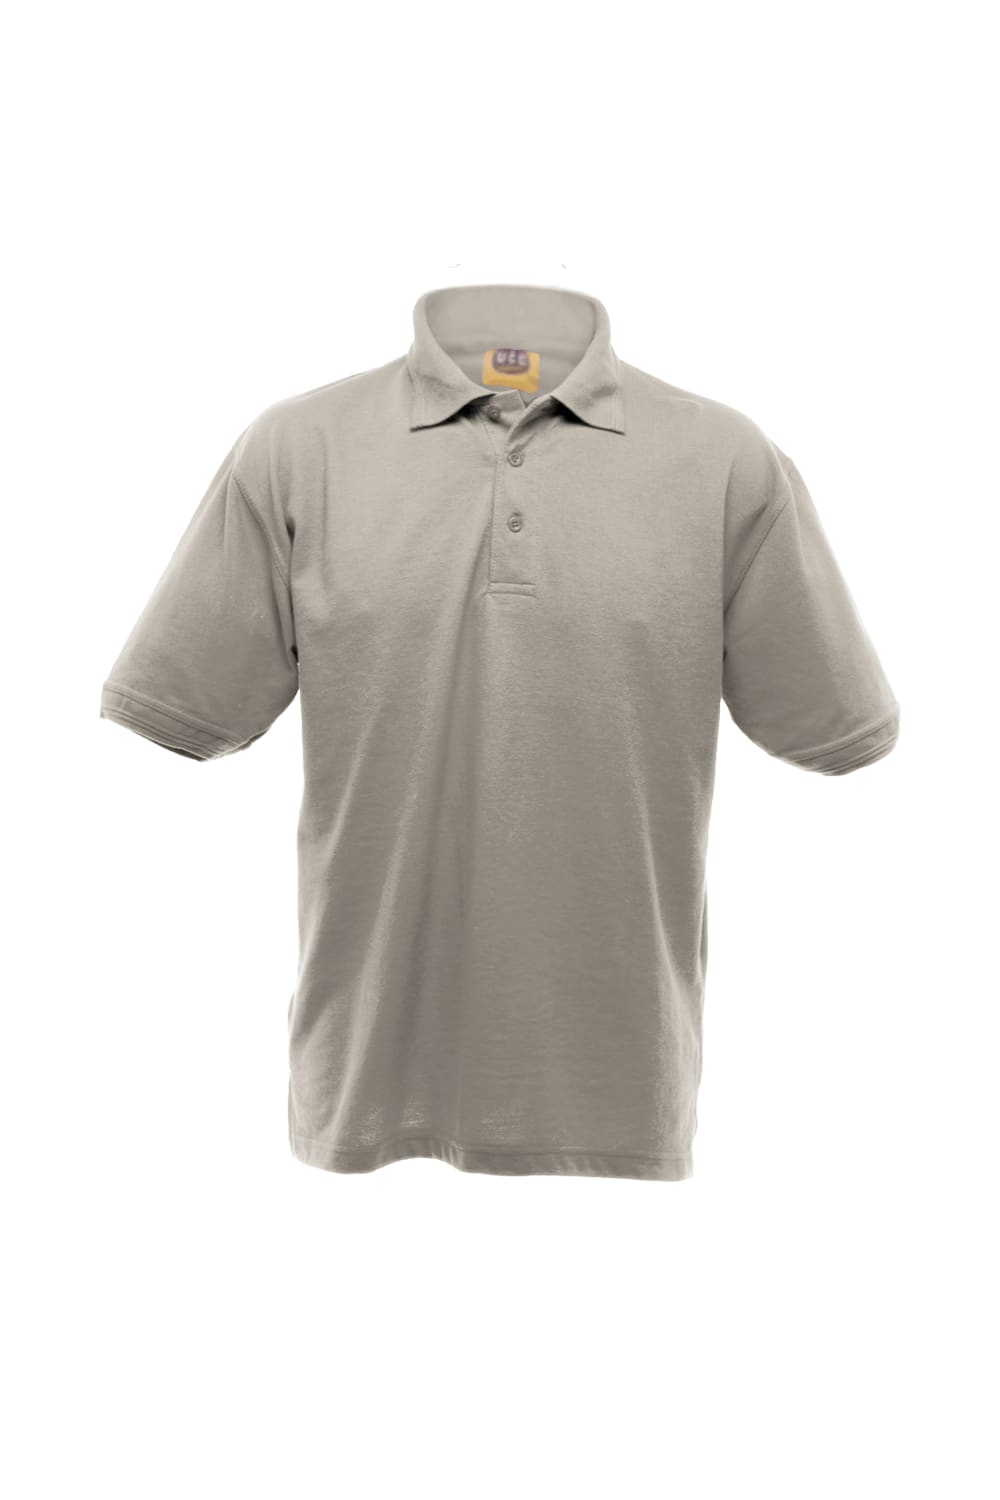 UCC 50/50 Mens Heavweight Plain Pique Short Sleeve Polo Shirt (Heather Grey)